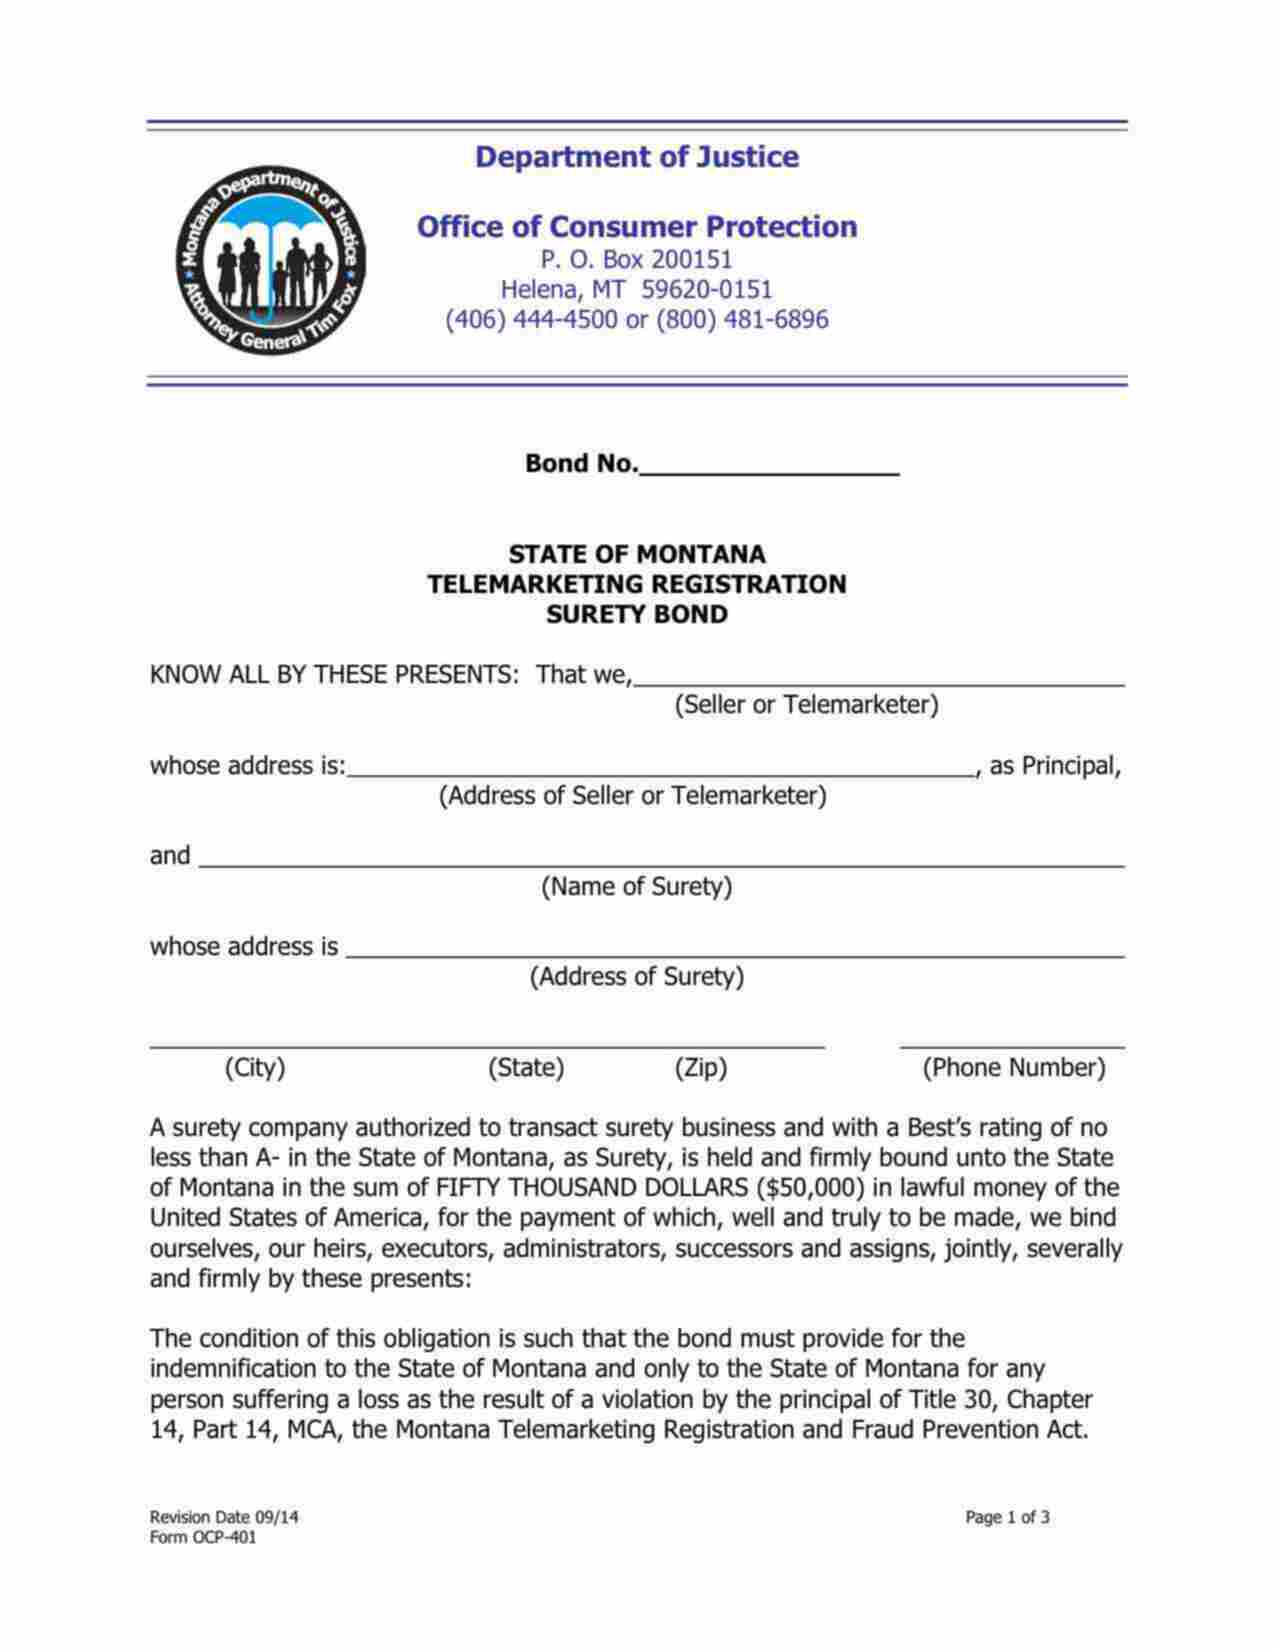 Montana Telemarketing Registration Bond Form